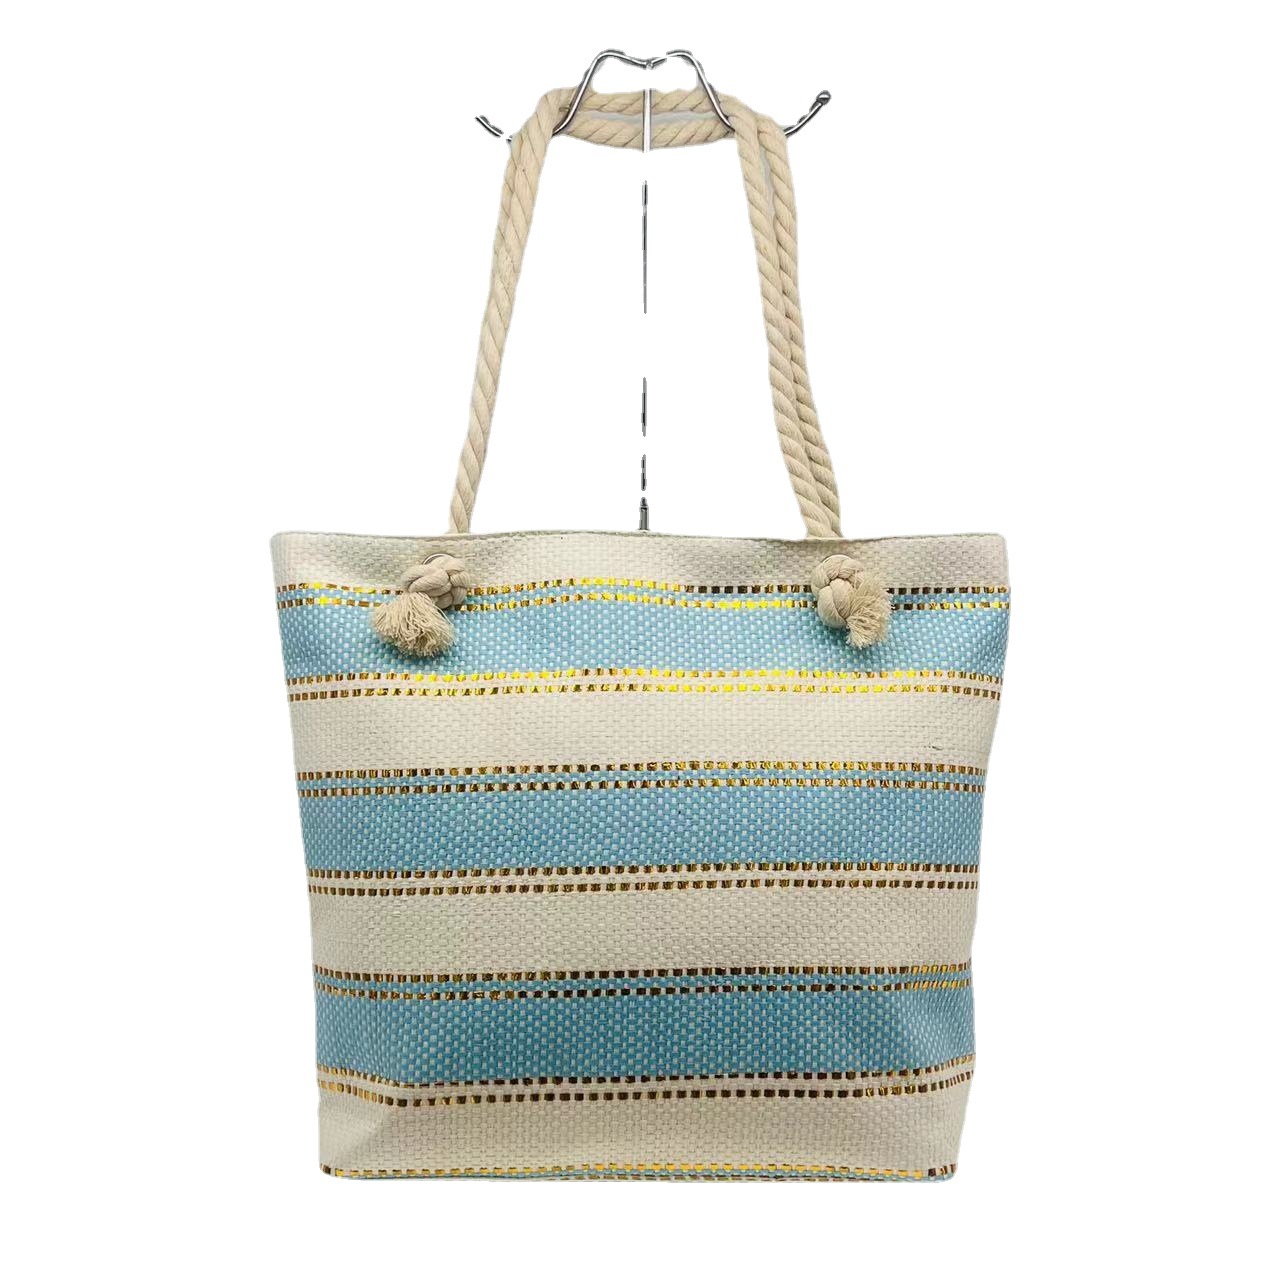 New Striped Striped Straw Bag Woven Women's Beach Bag Tote Bag Women's Bag Large Capacity Simple Mummy Bag